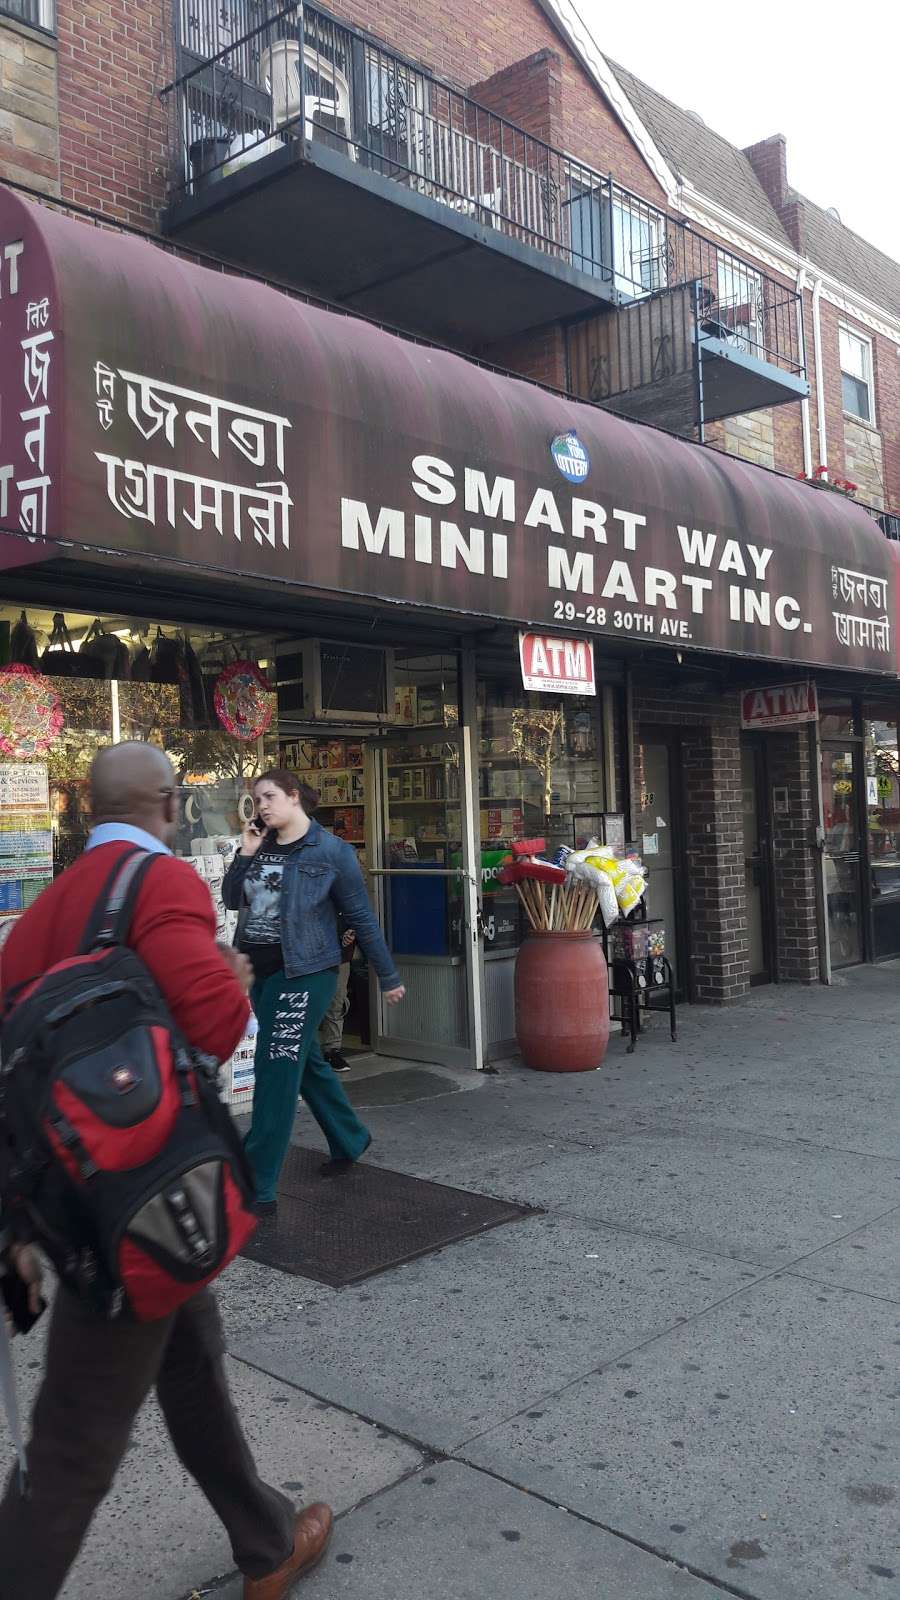 Smart Way Mini Mart Inc | Photo 2 of 2 | Address: 2928 30th Ave, Astoria, NY 11102, USA | Phone: (718) 274-1609